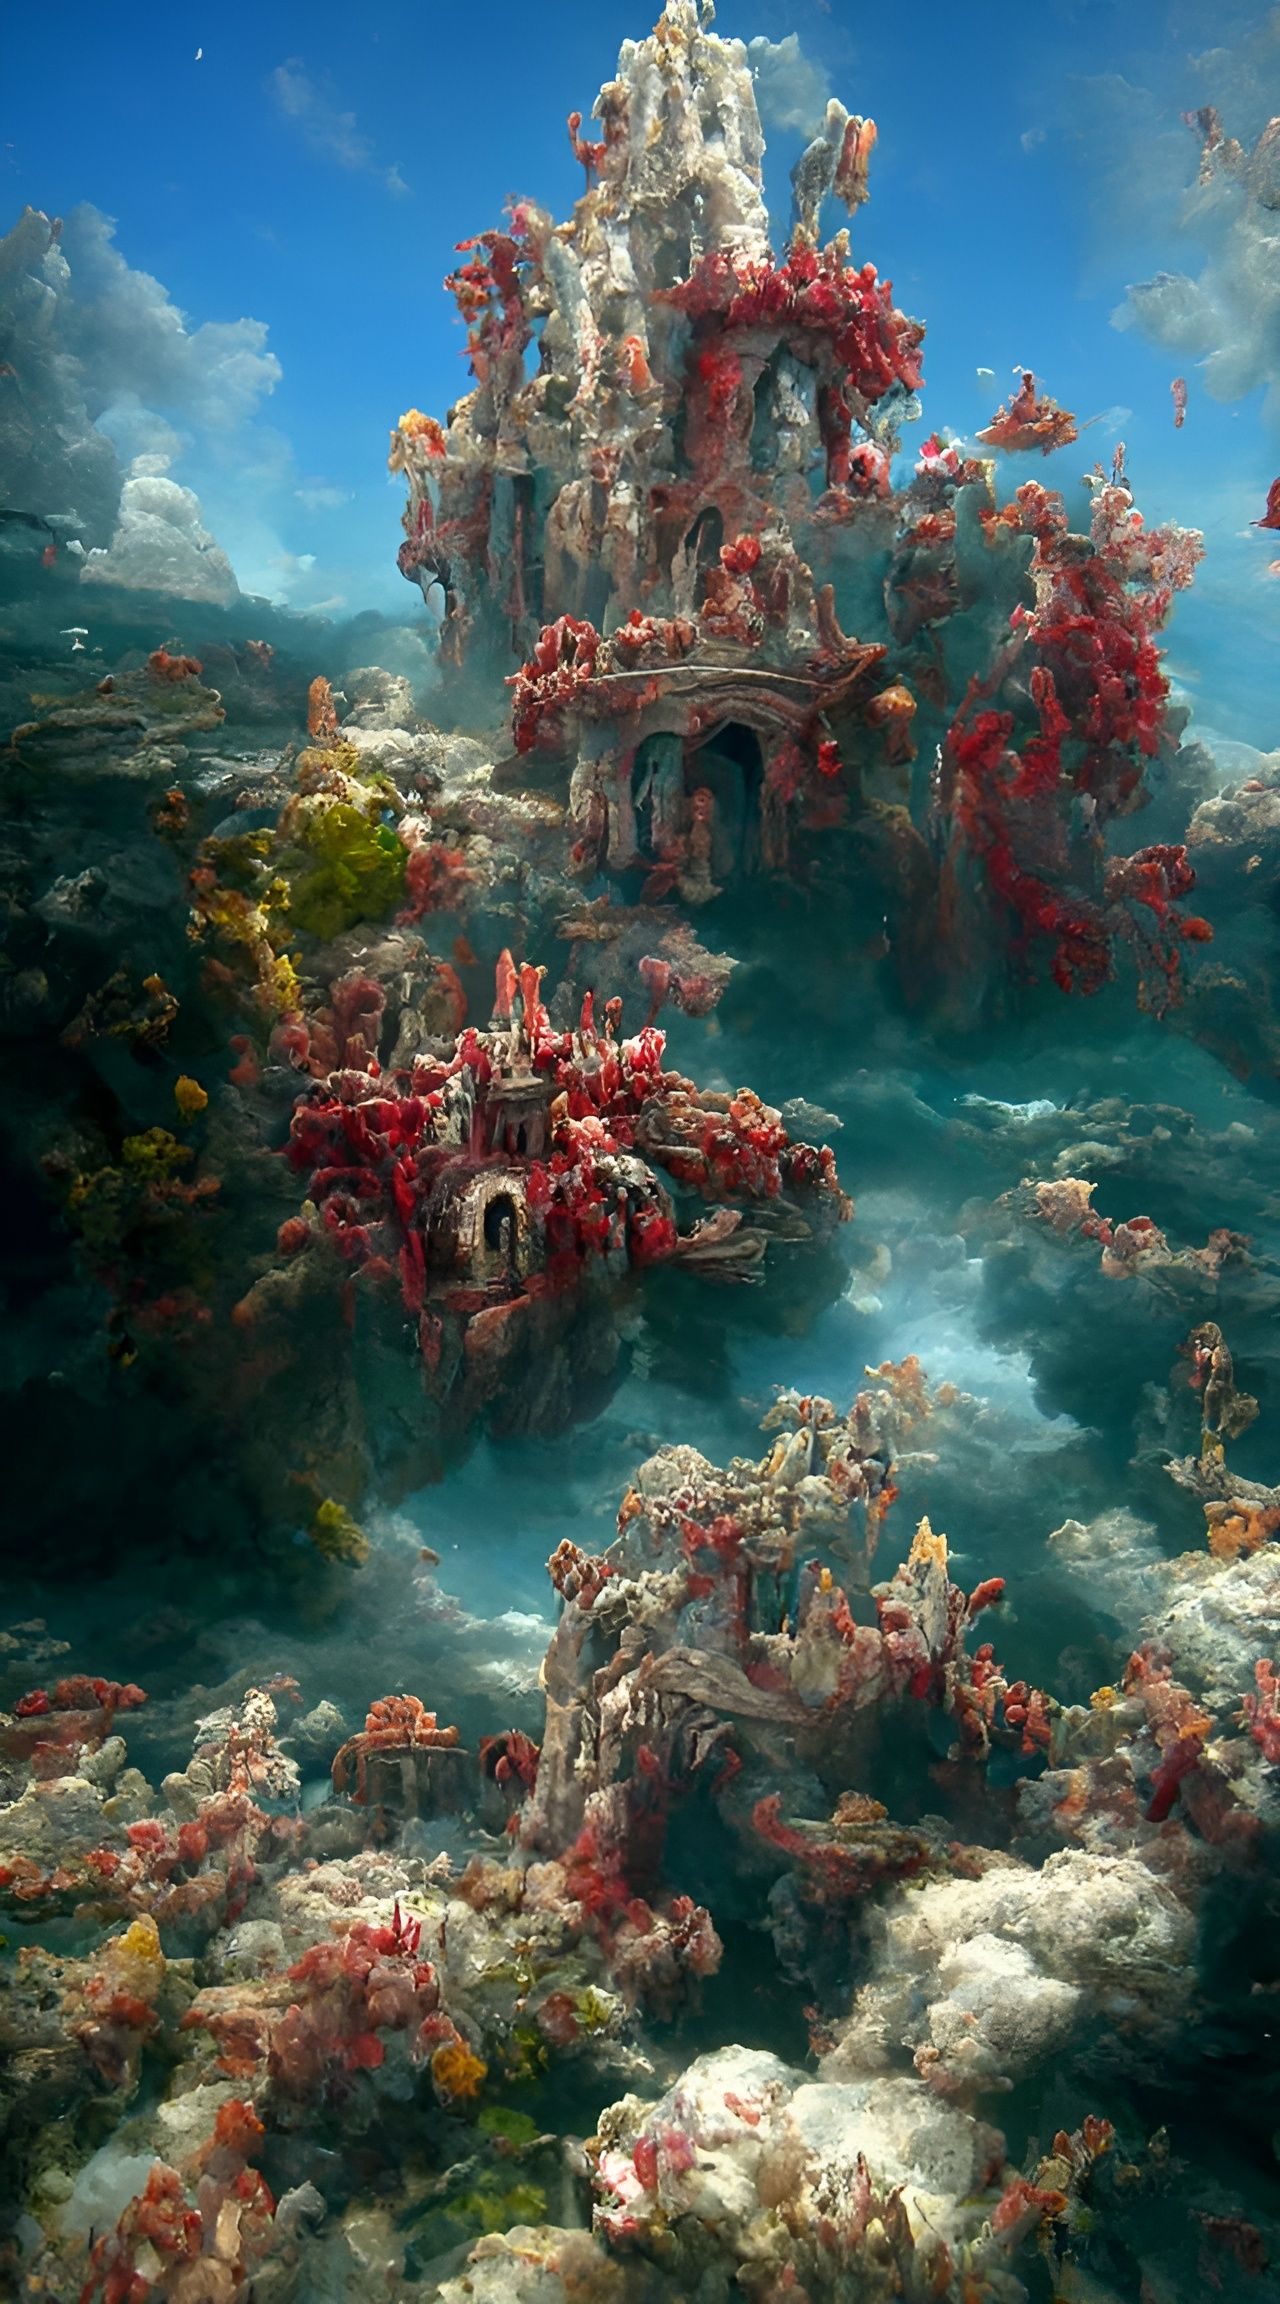 Coral castle - no start image